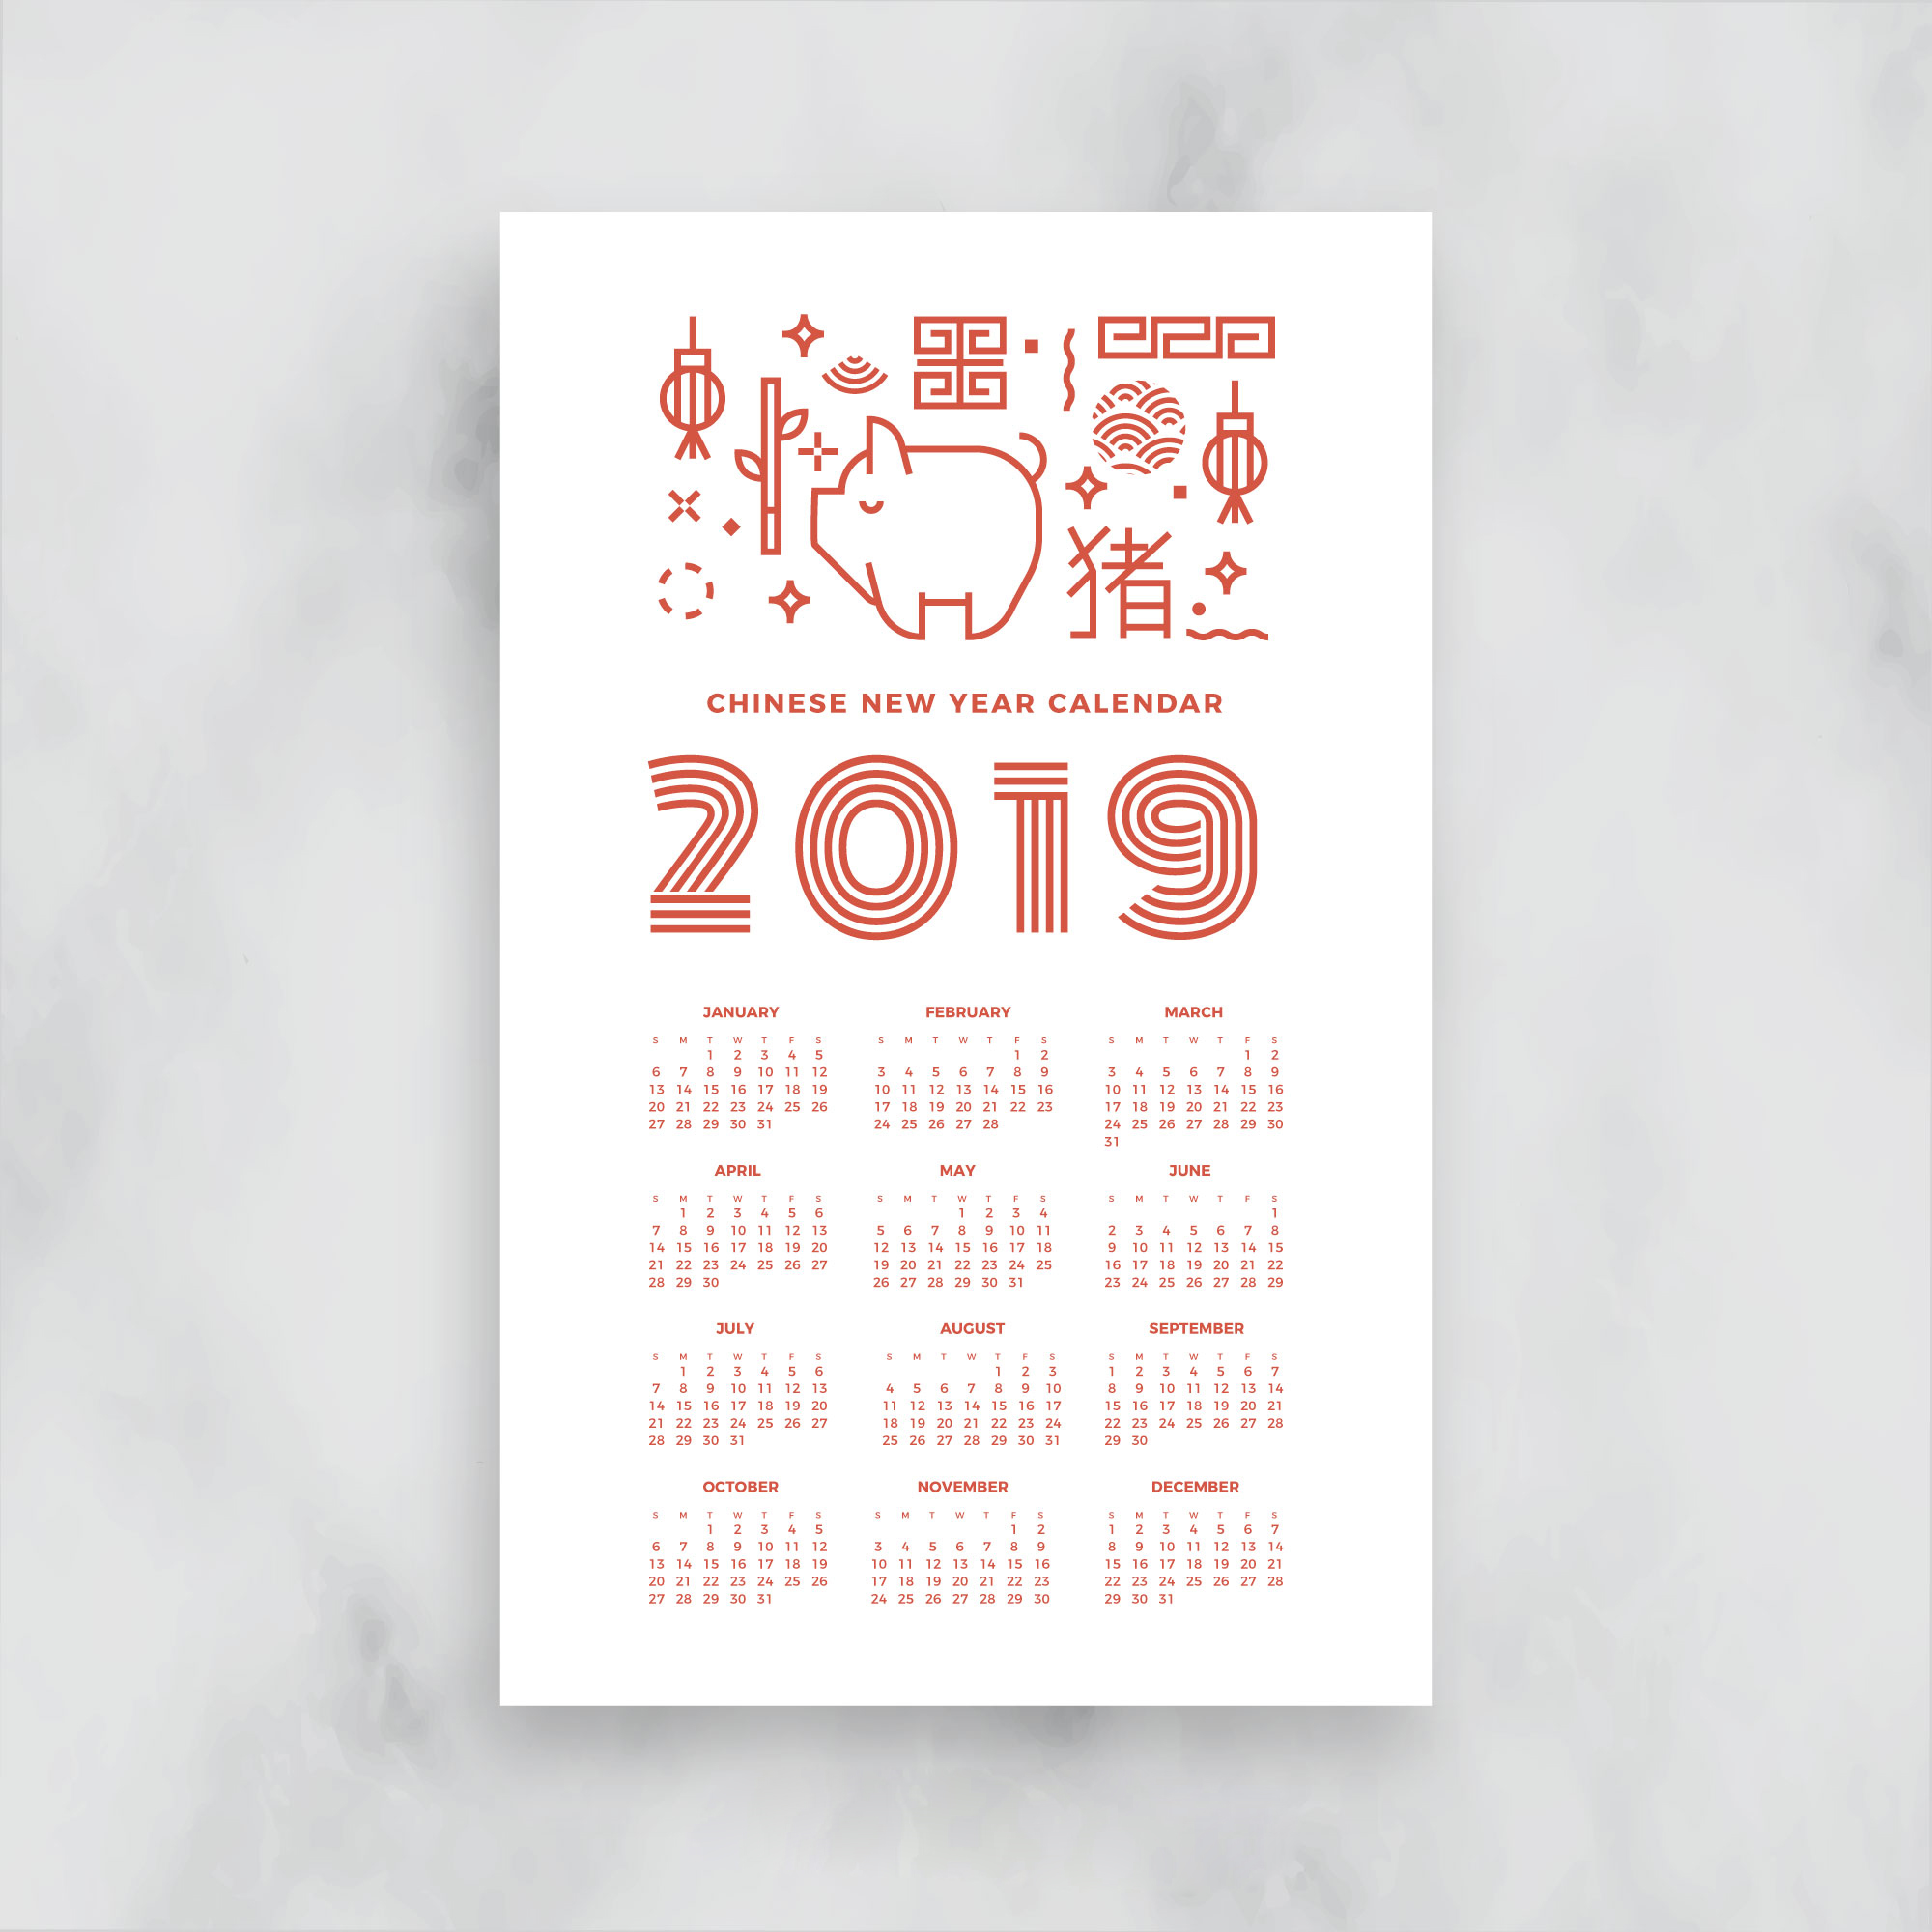 时尚简约的2019新年挂历日历矢量素材模板 Stylish Minimalist 2019 New Year Calendar Calendar Vector Material Template插图2